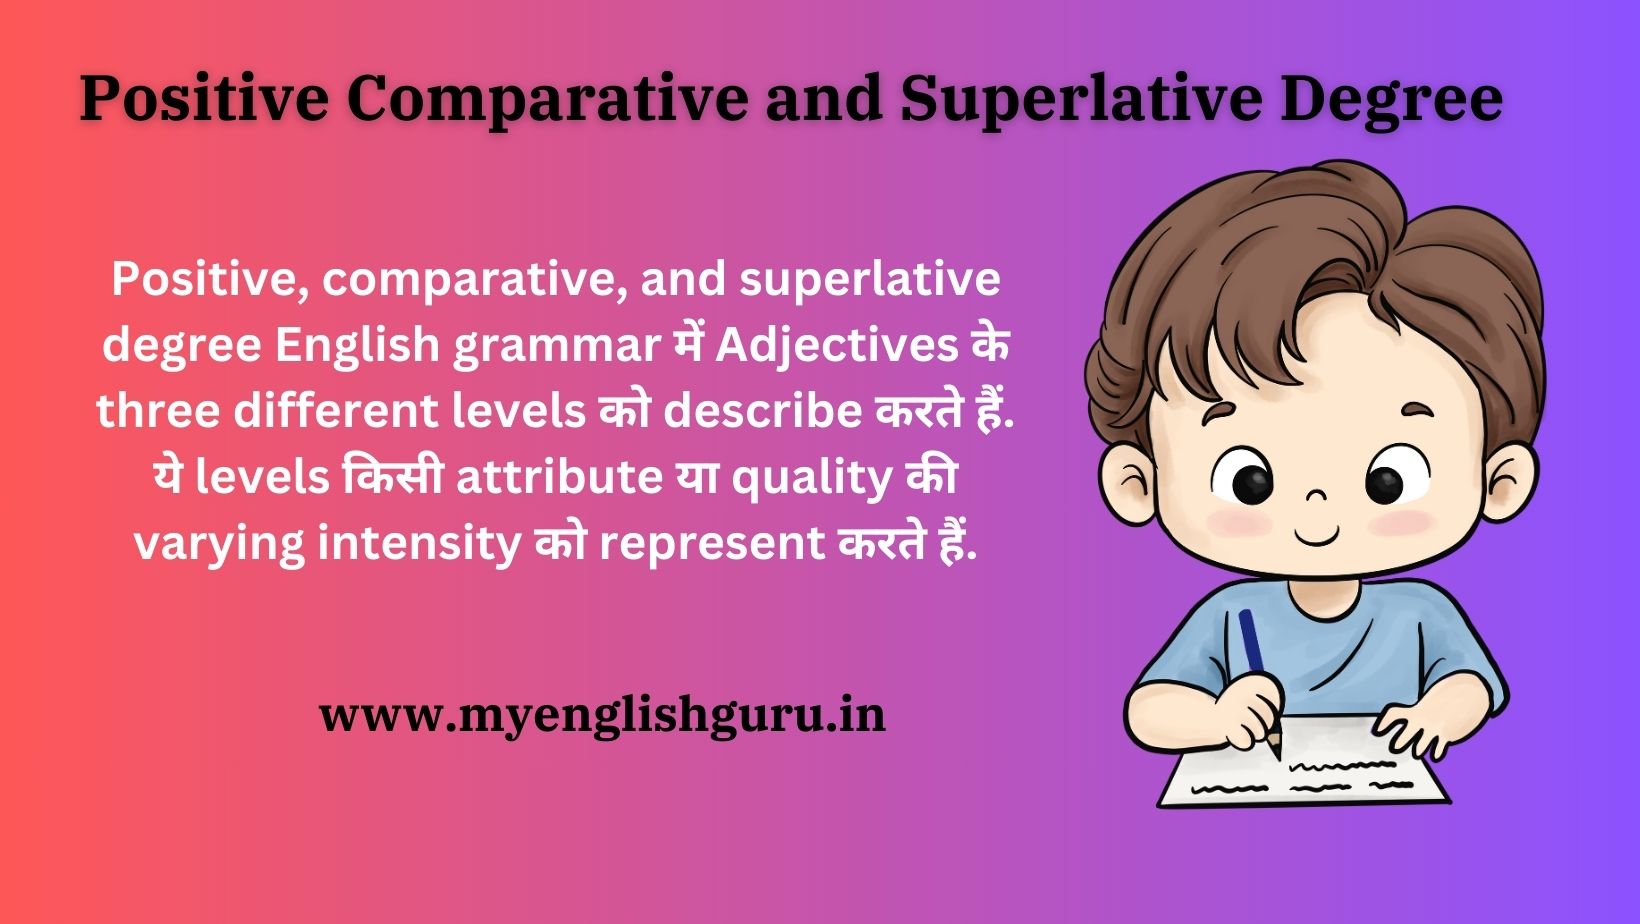 Positive, comparative, and superlative degree